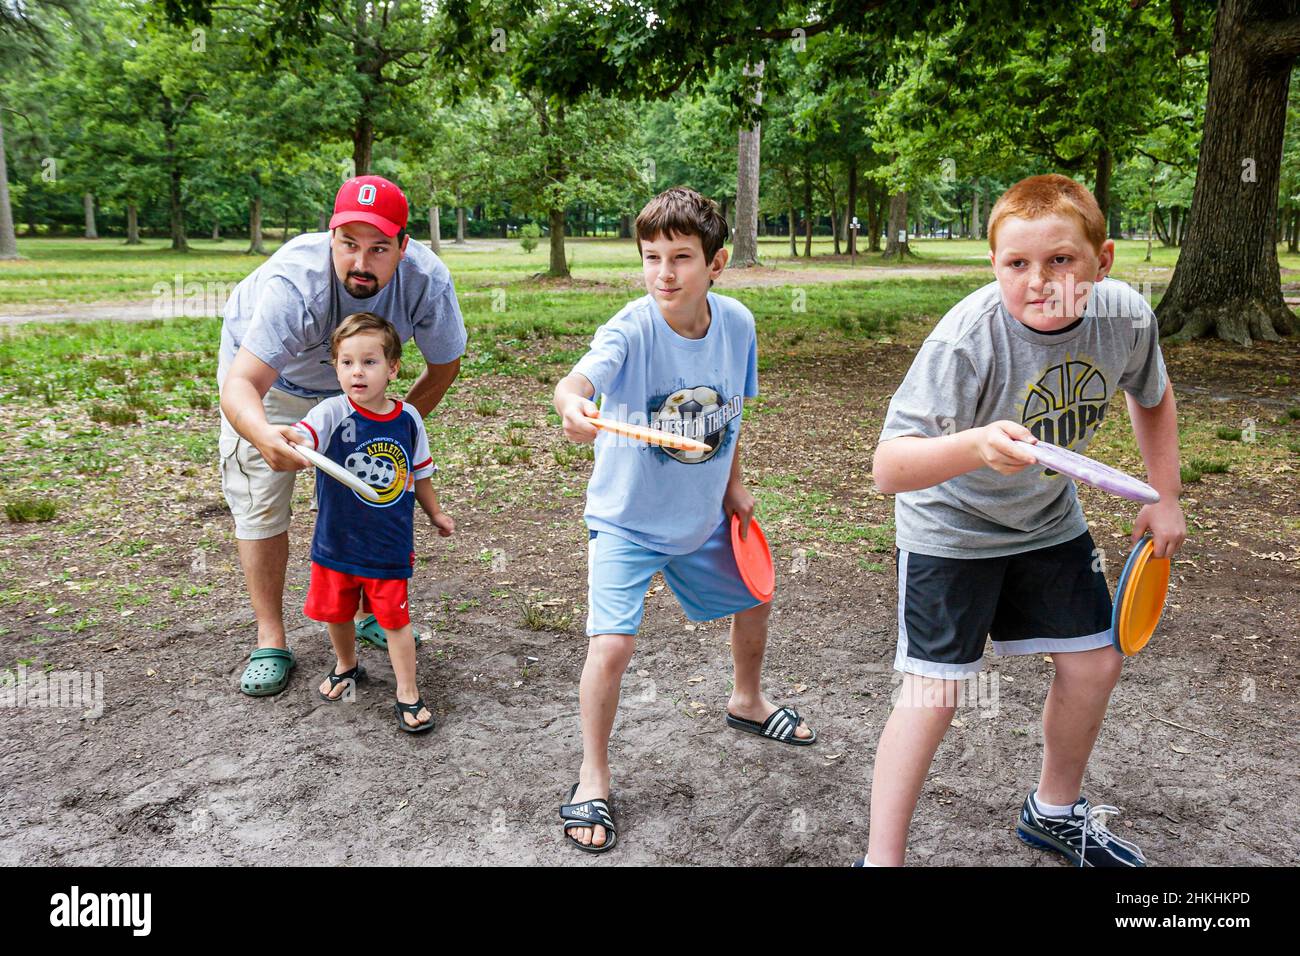 Newport News Park Virginia,disc golf,boys kids children father parent aiming game sport Stock Photo